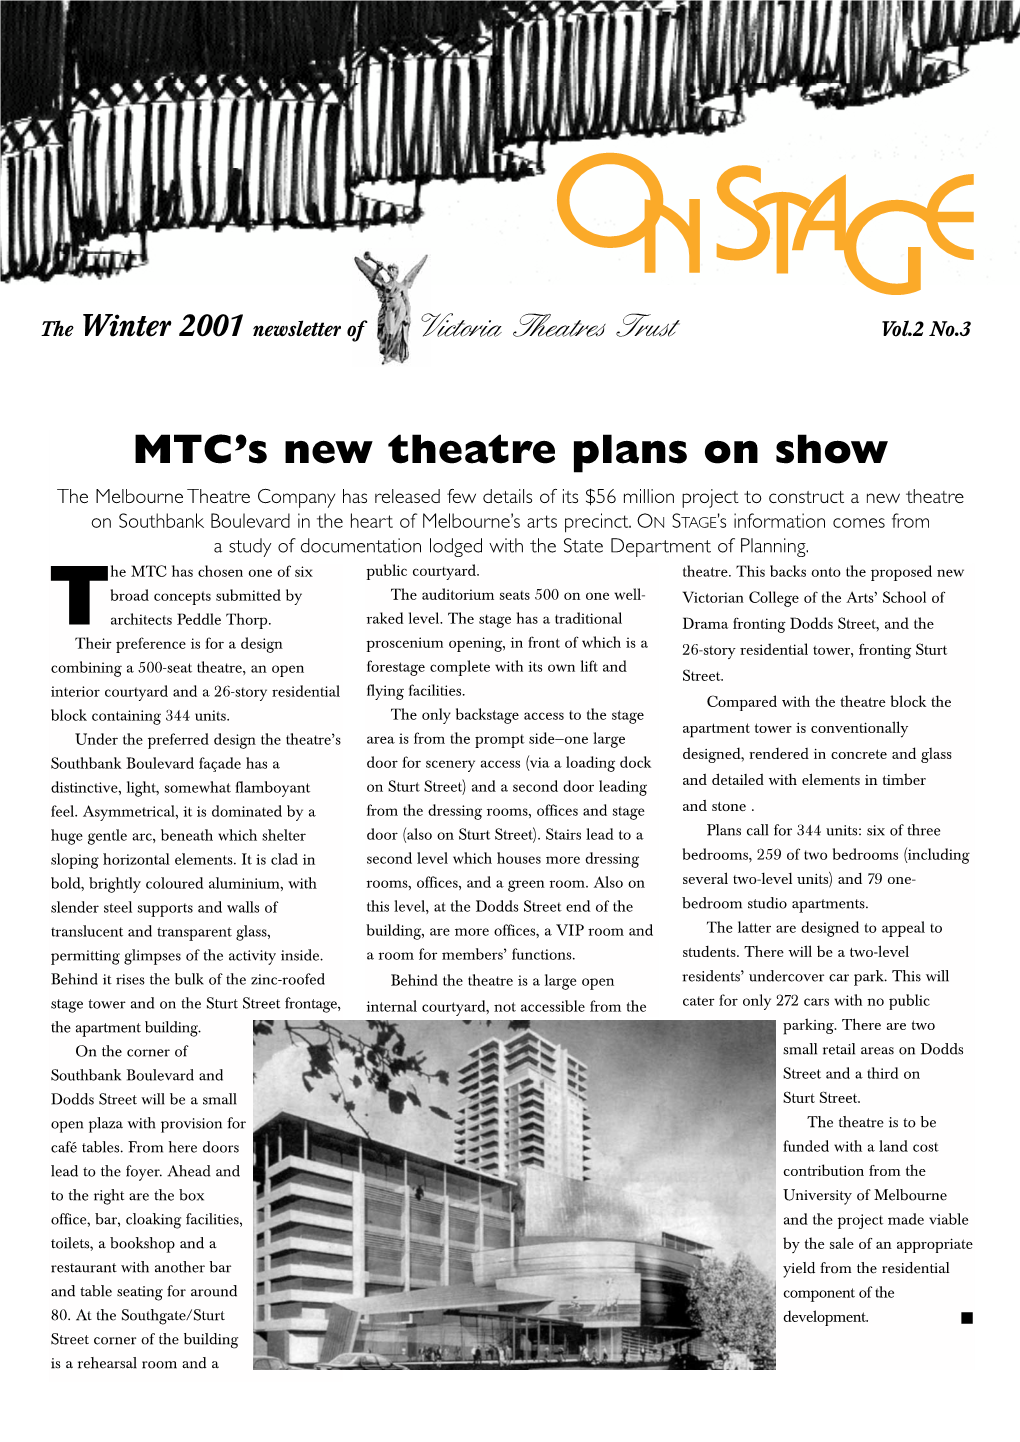 MTC's New Theatre Plans on Show